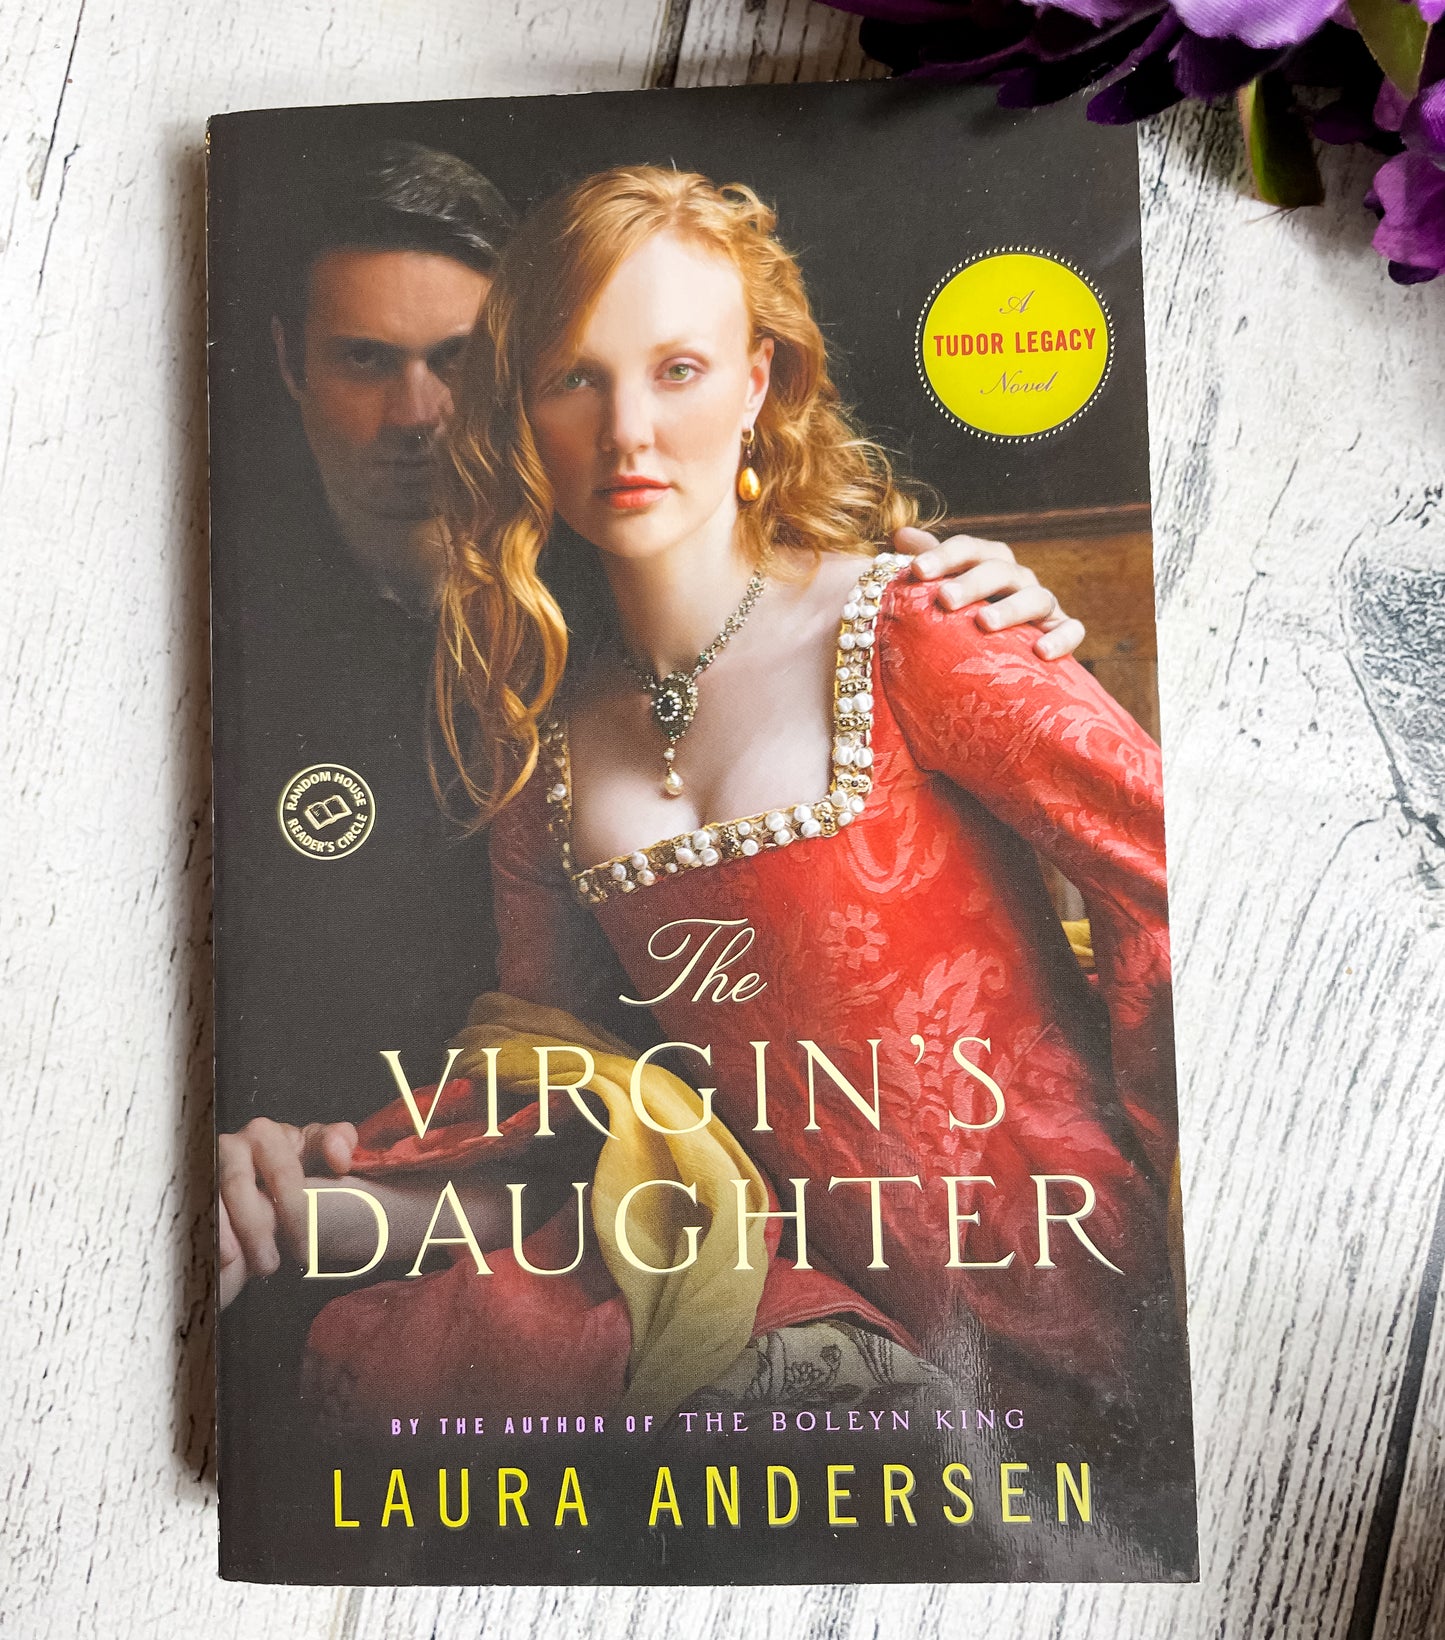 The Virgin's Daughter by Laura Andersen (Tudor Legacy #1)